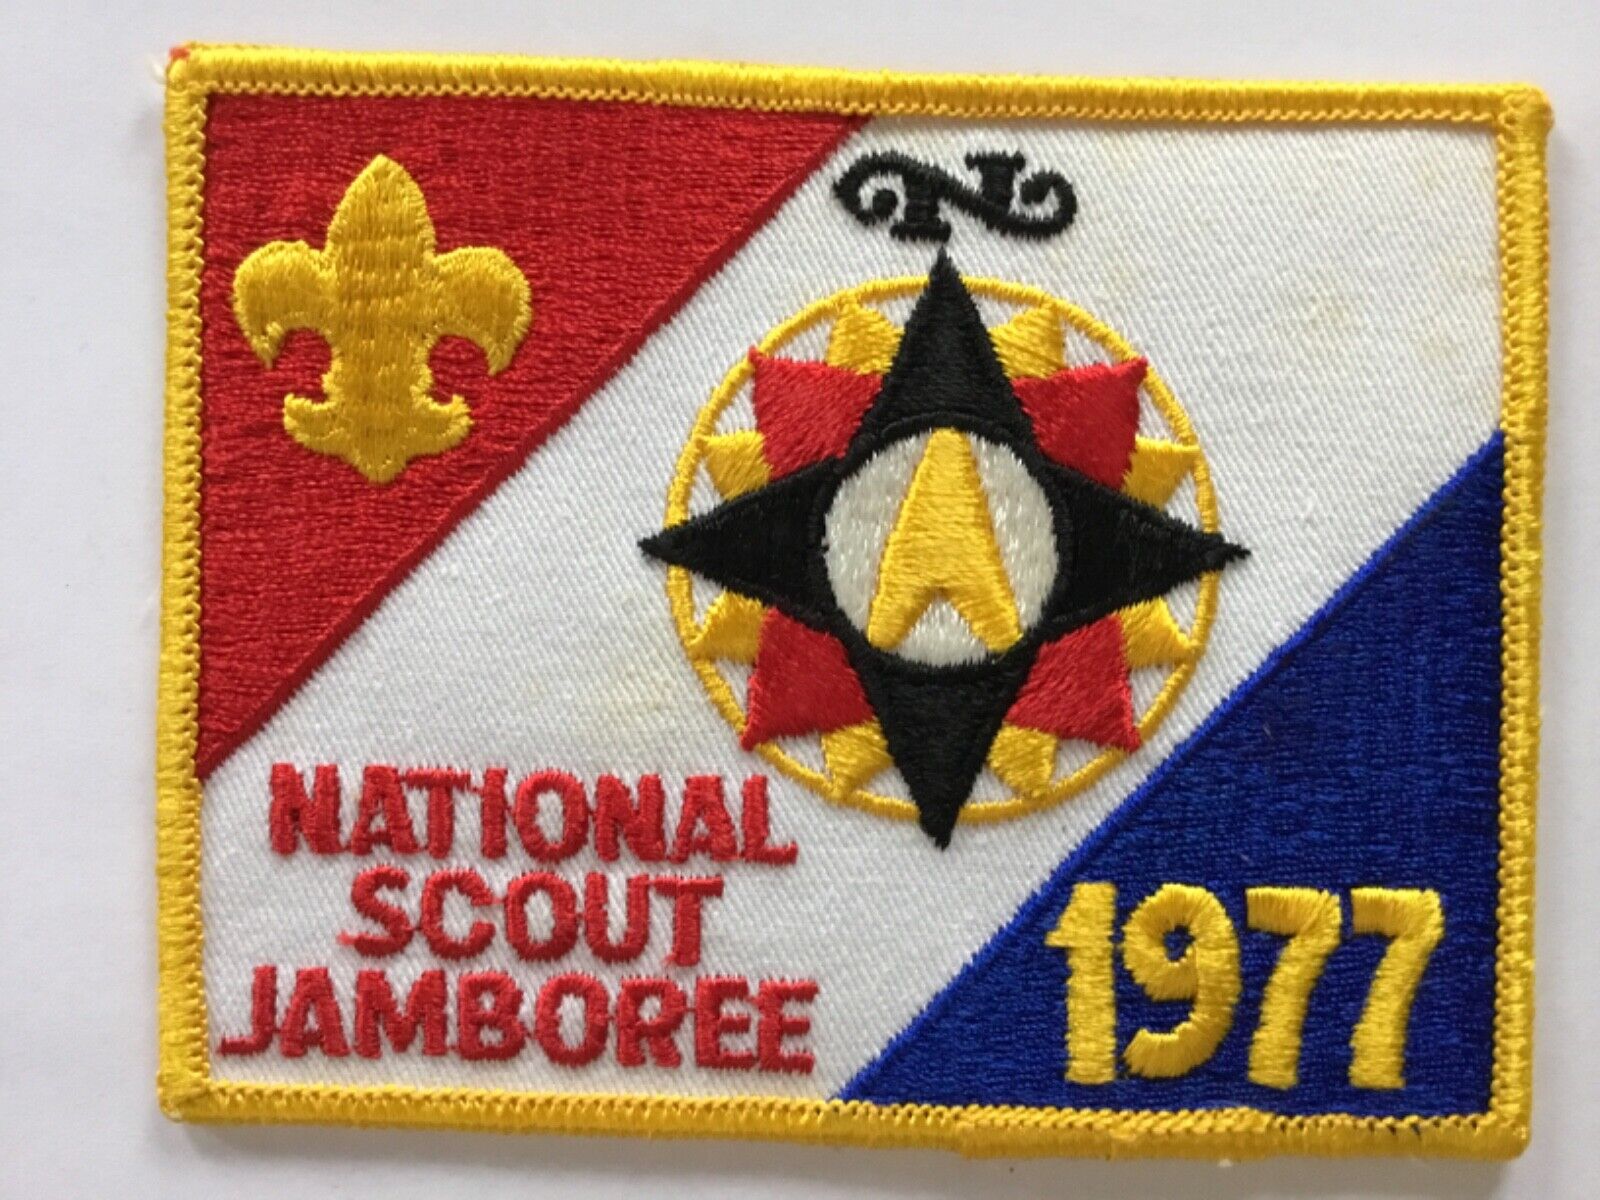 1977 National Scout Jamboree Jacket Patch